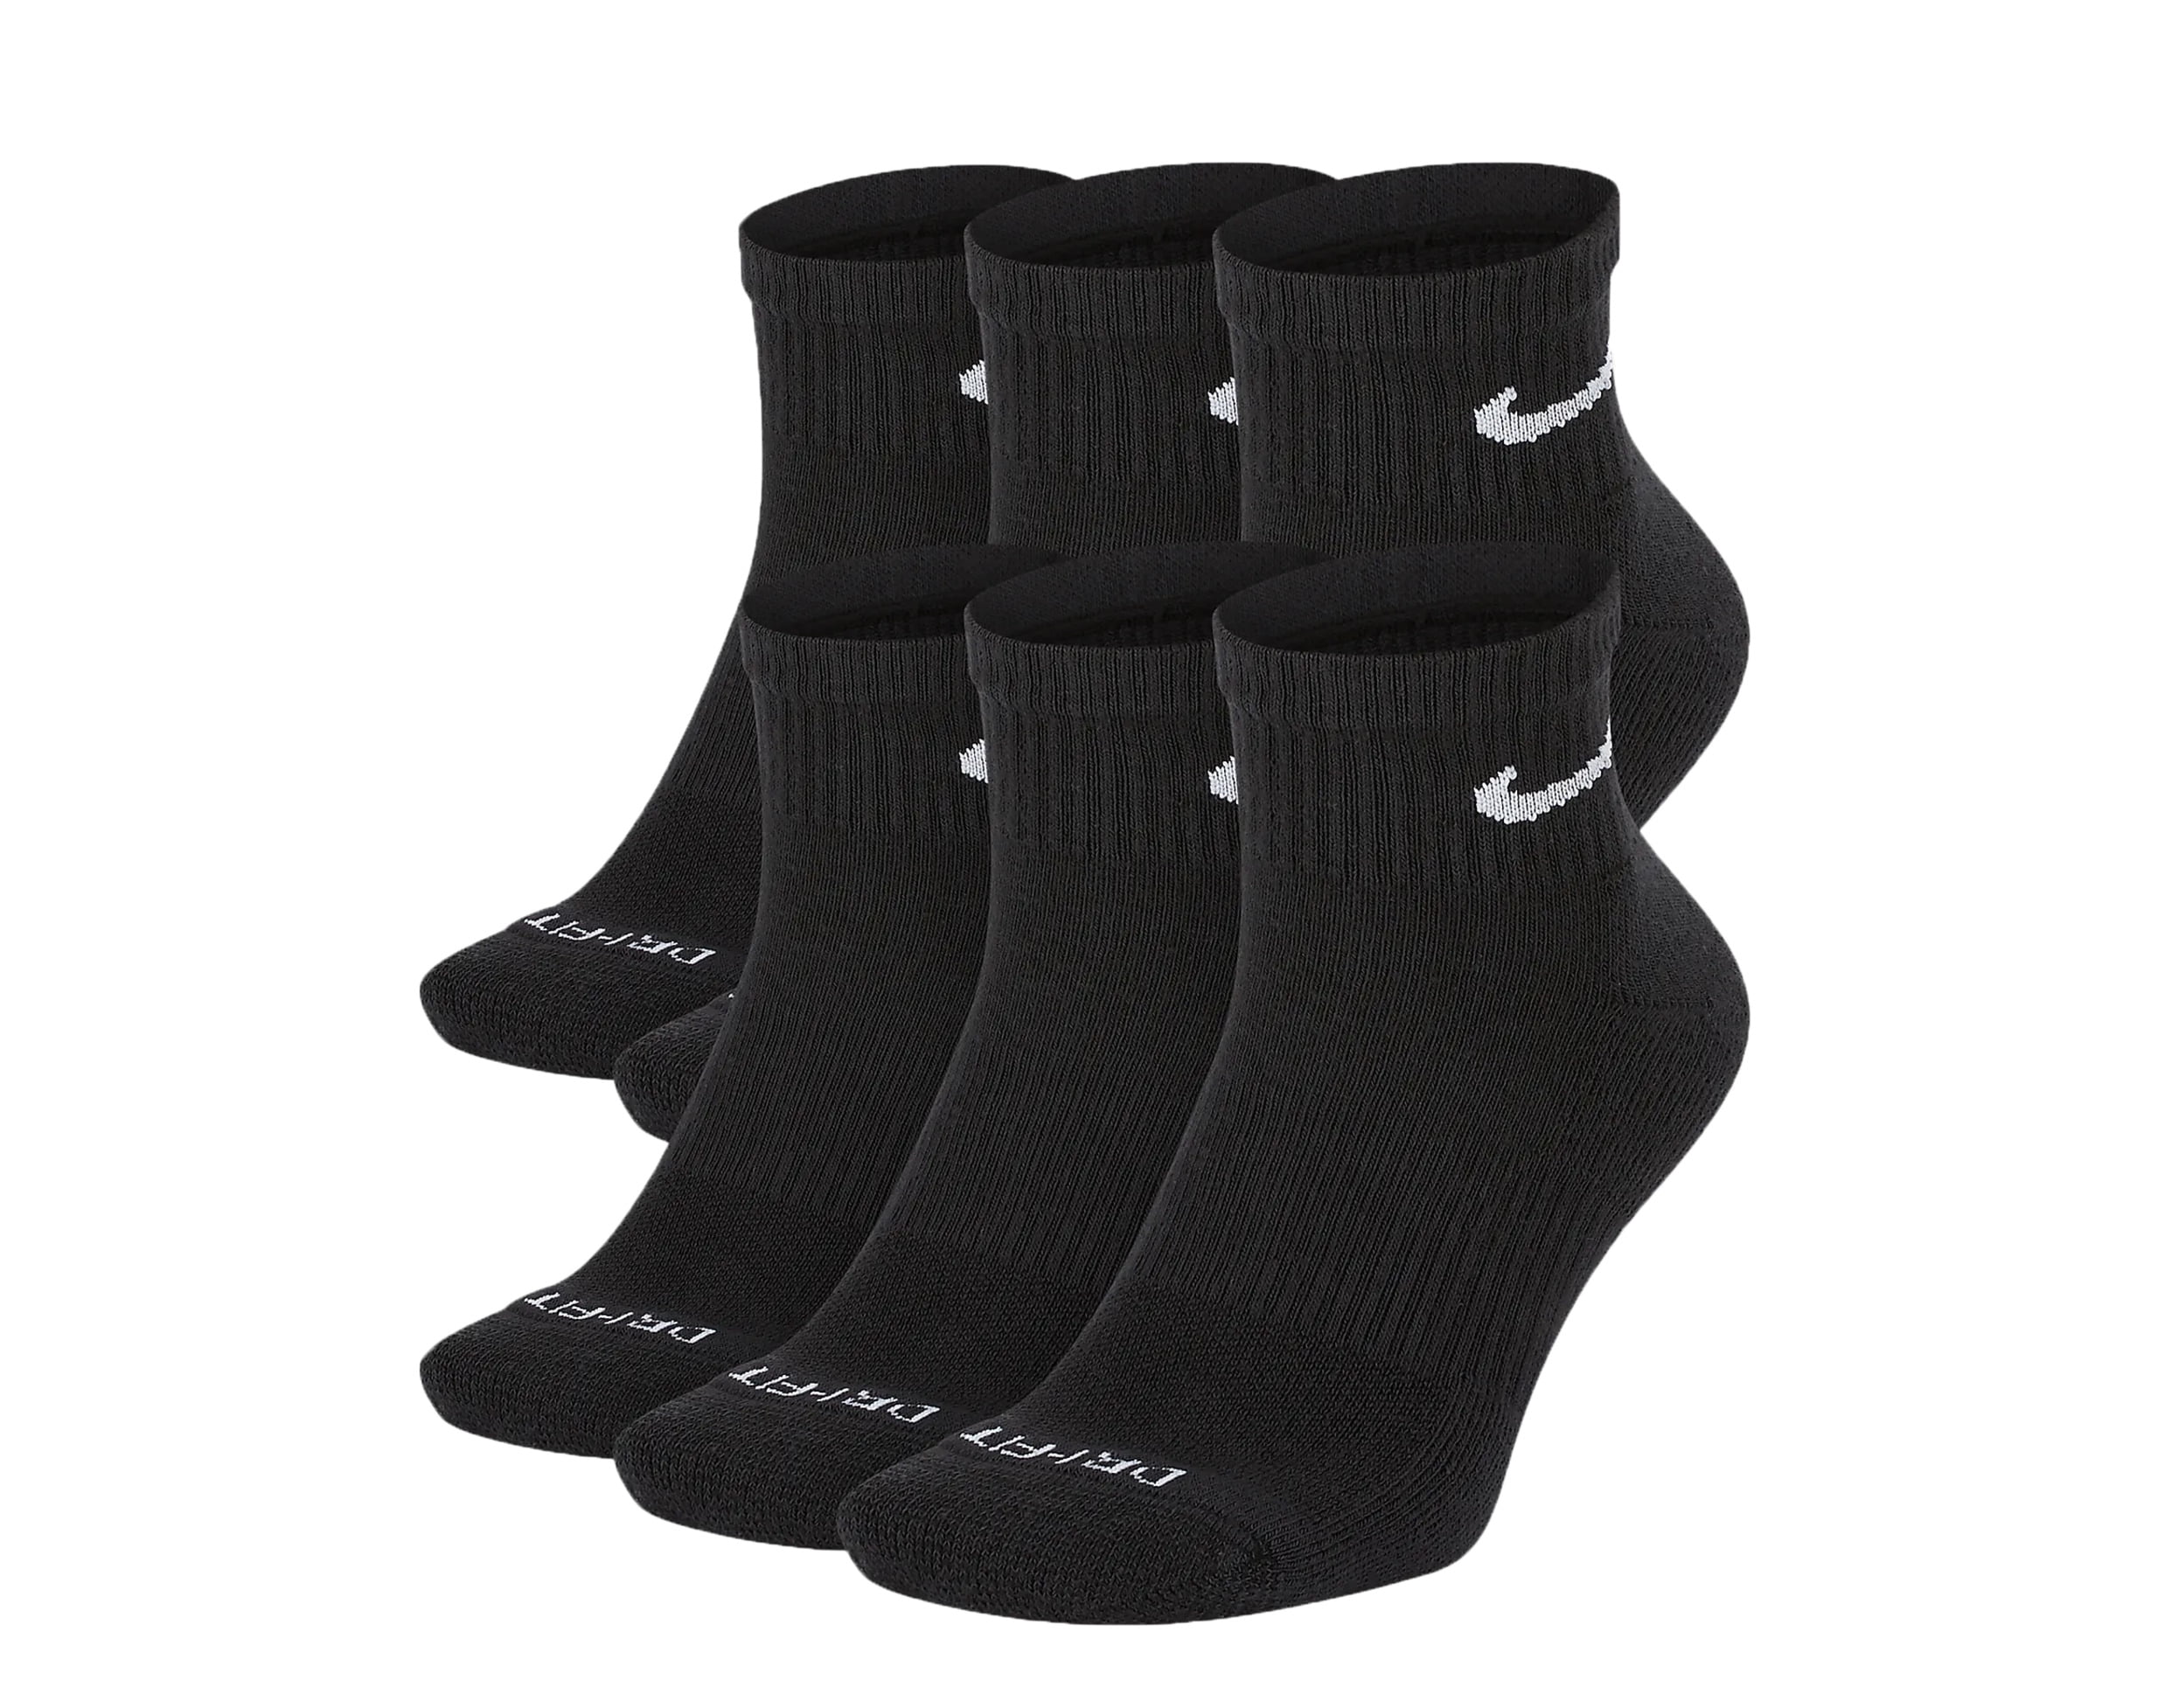 nike socks on sale near me